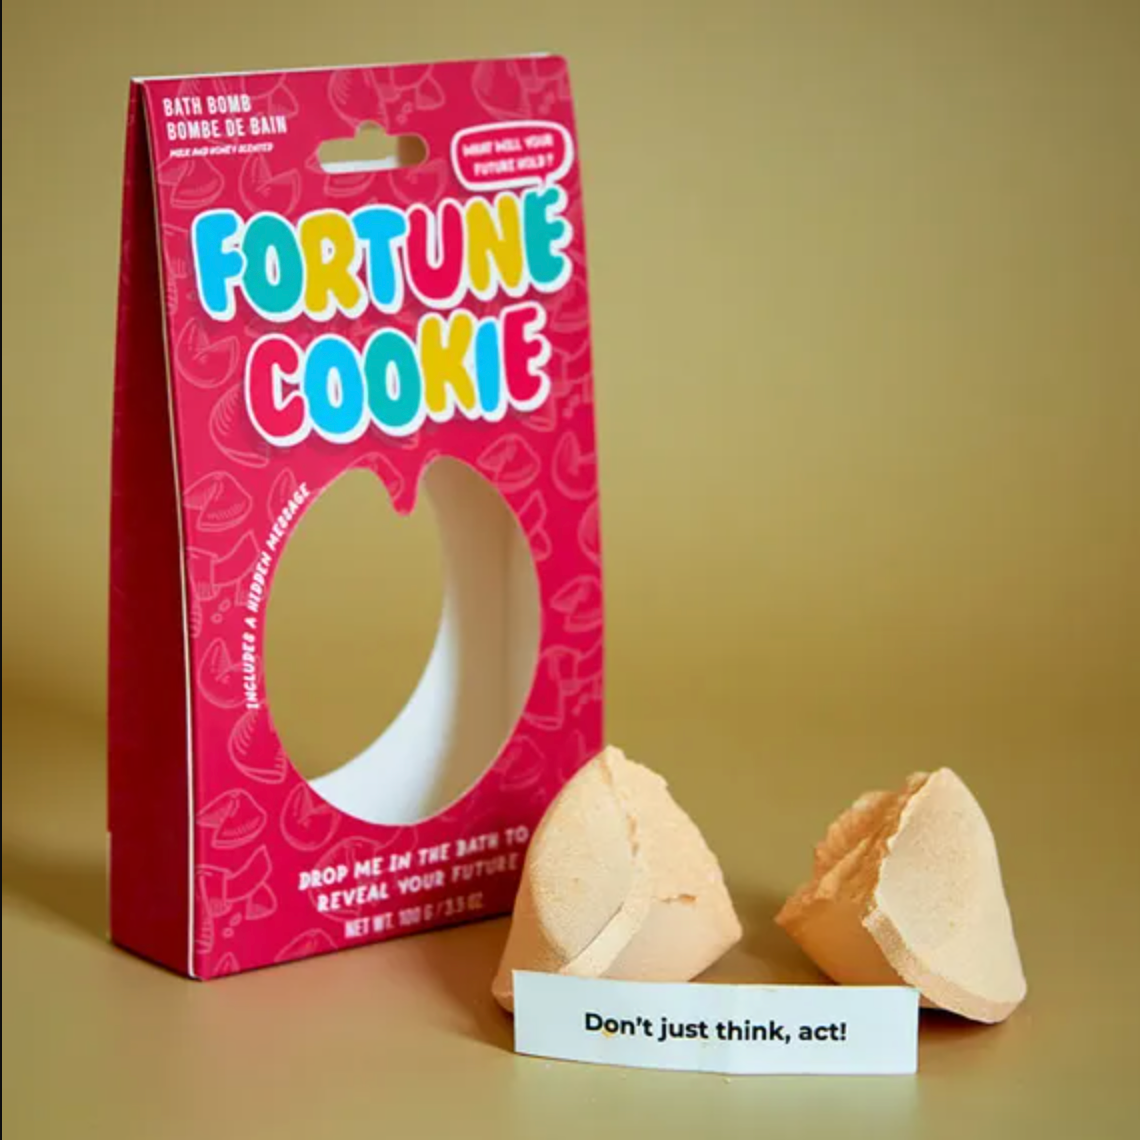 Fortune Cookie Bath Bomb